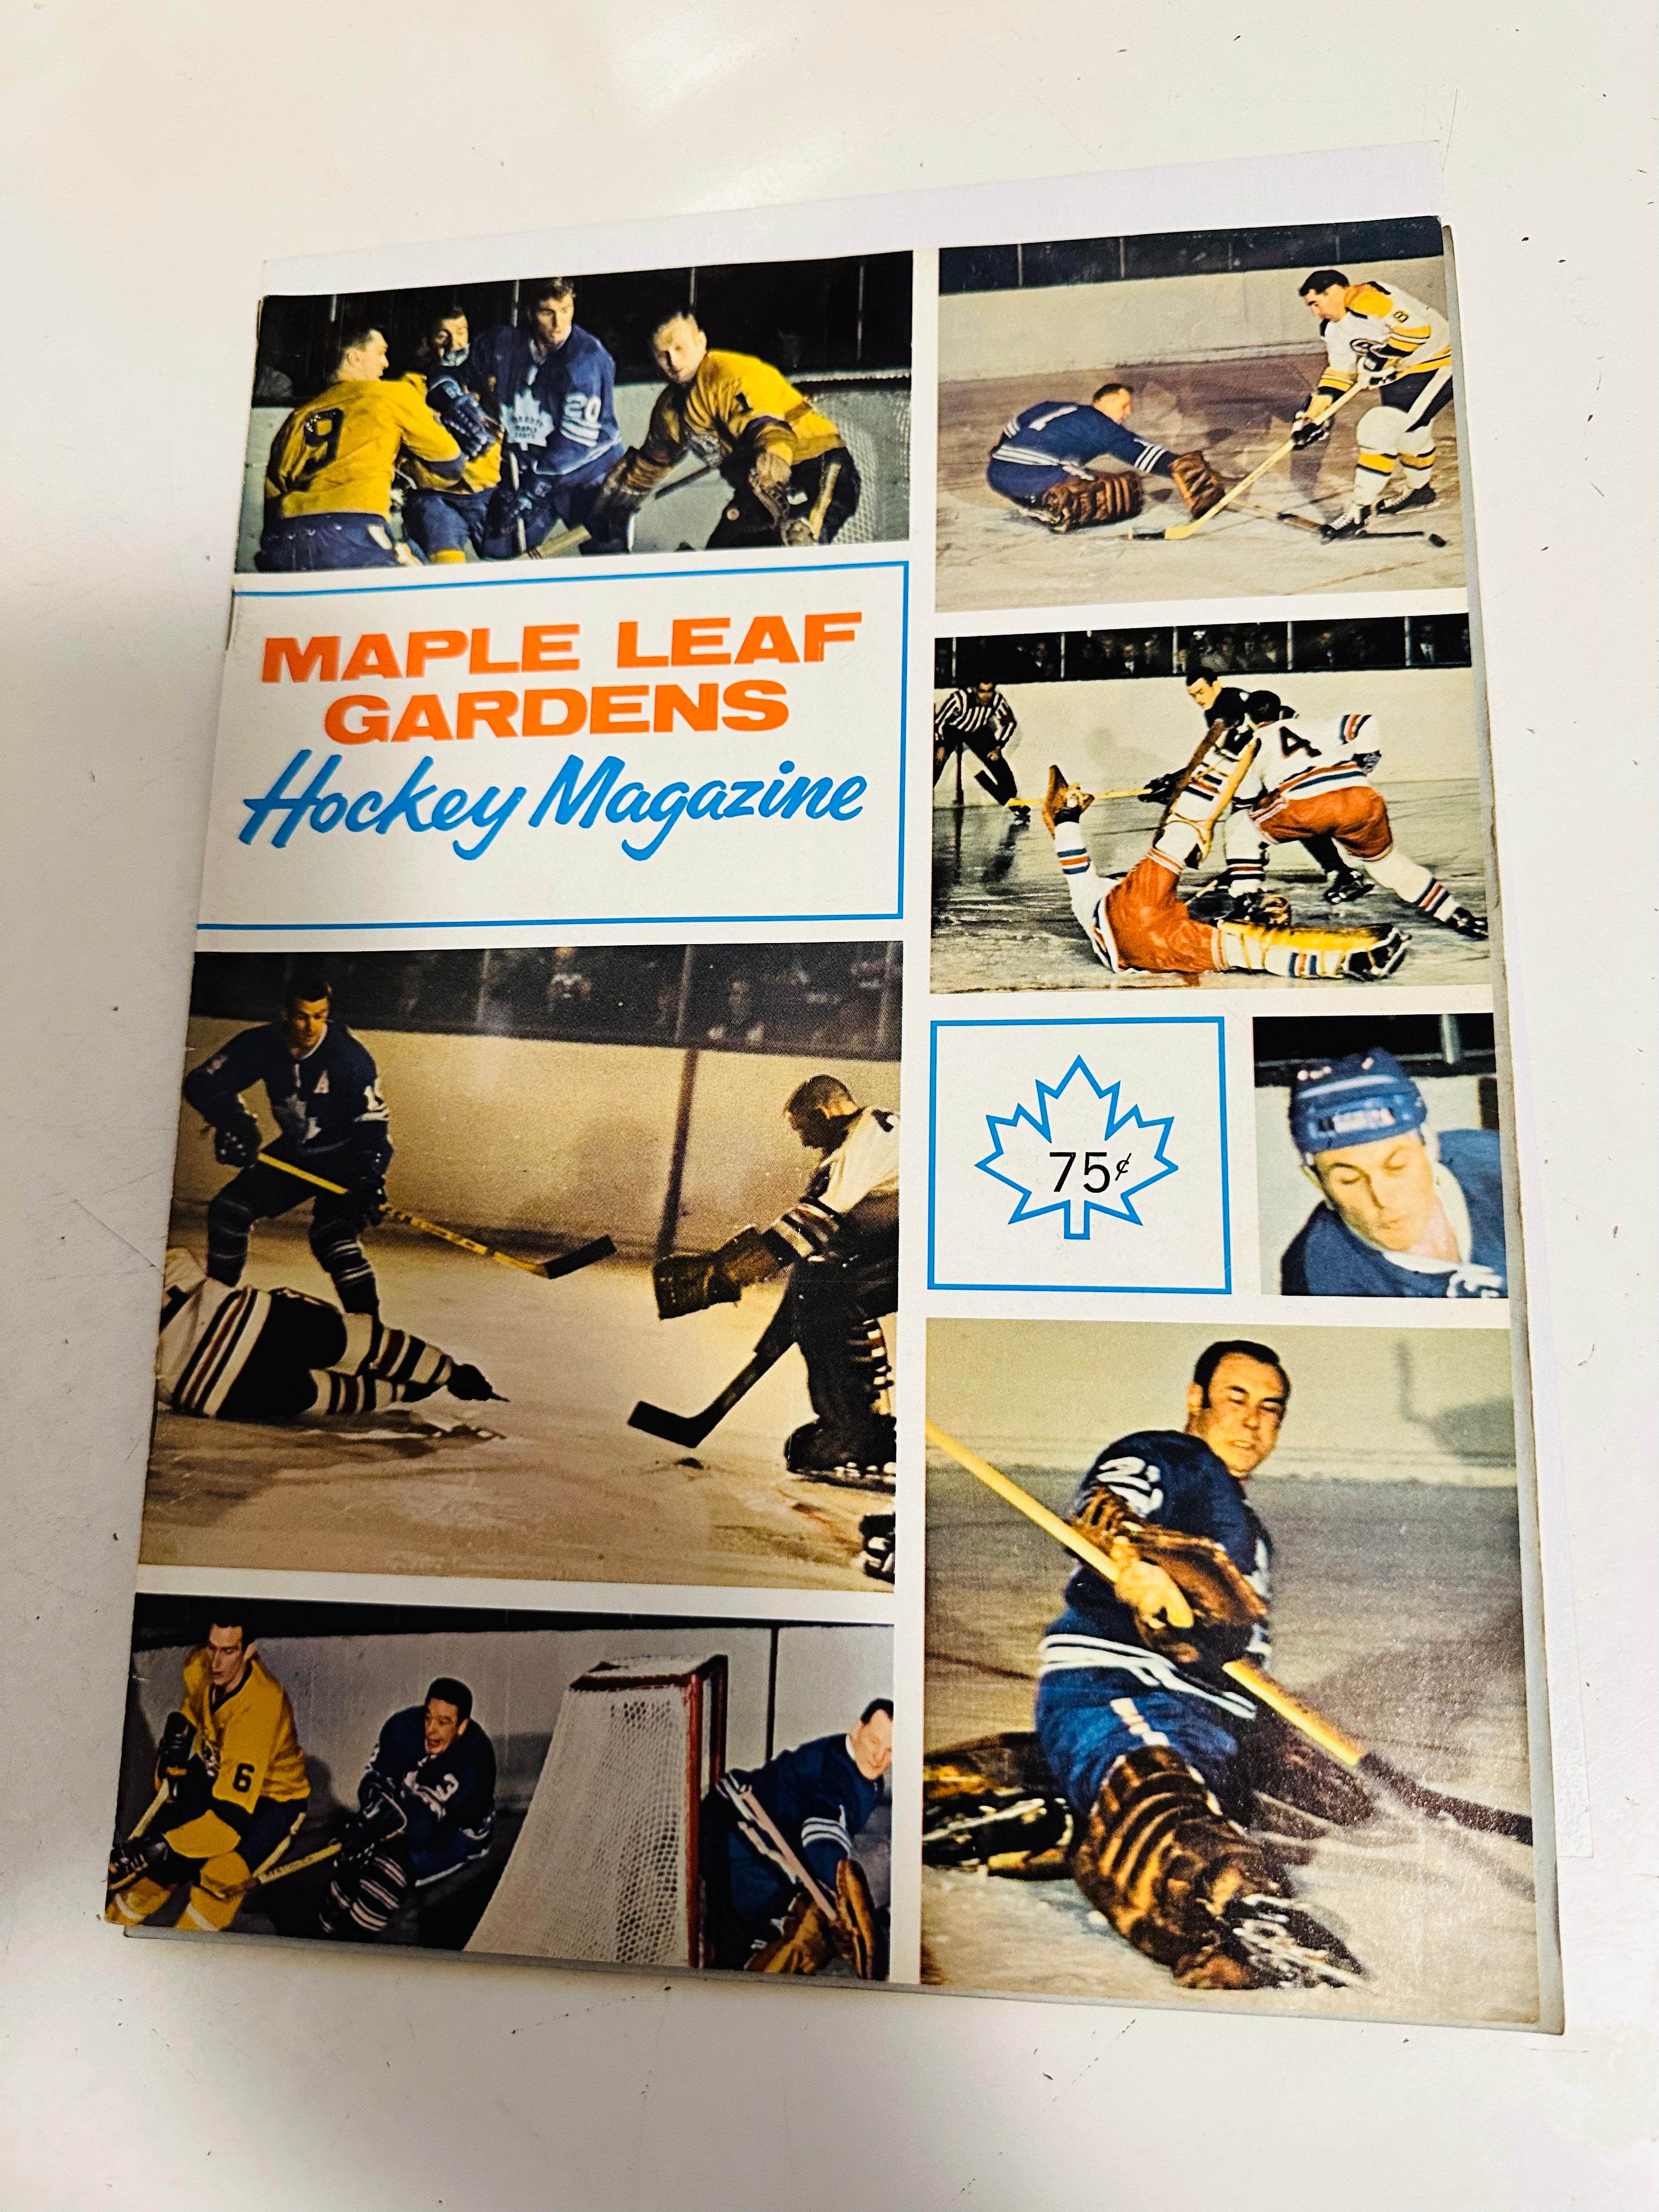 Maple Leaf Gardens March 8 game program 1968/69